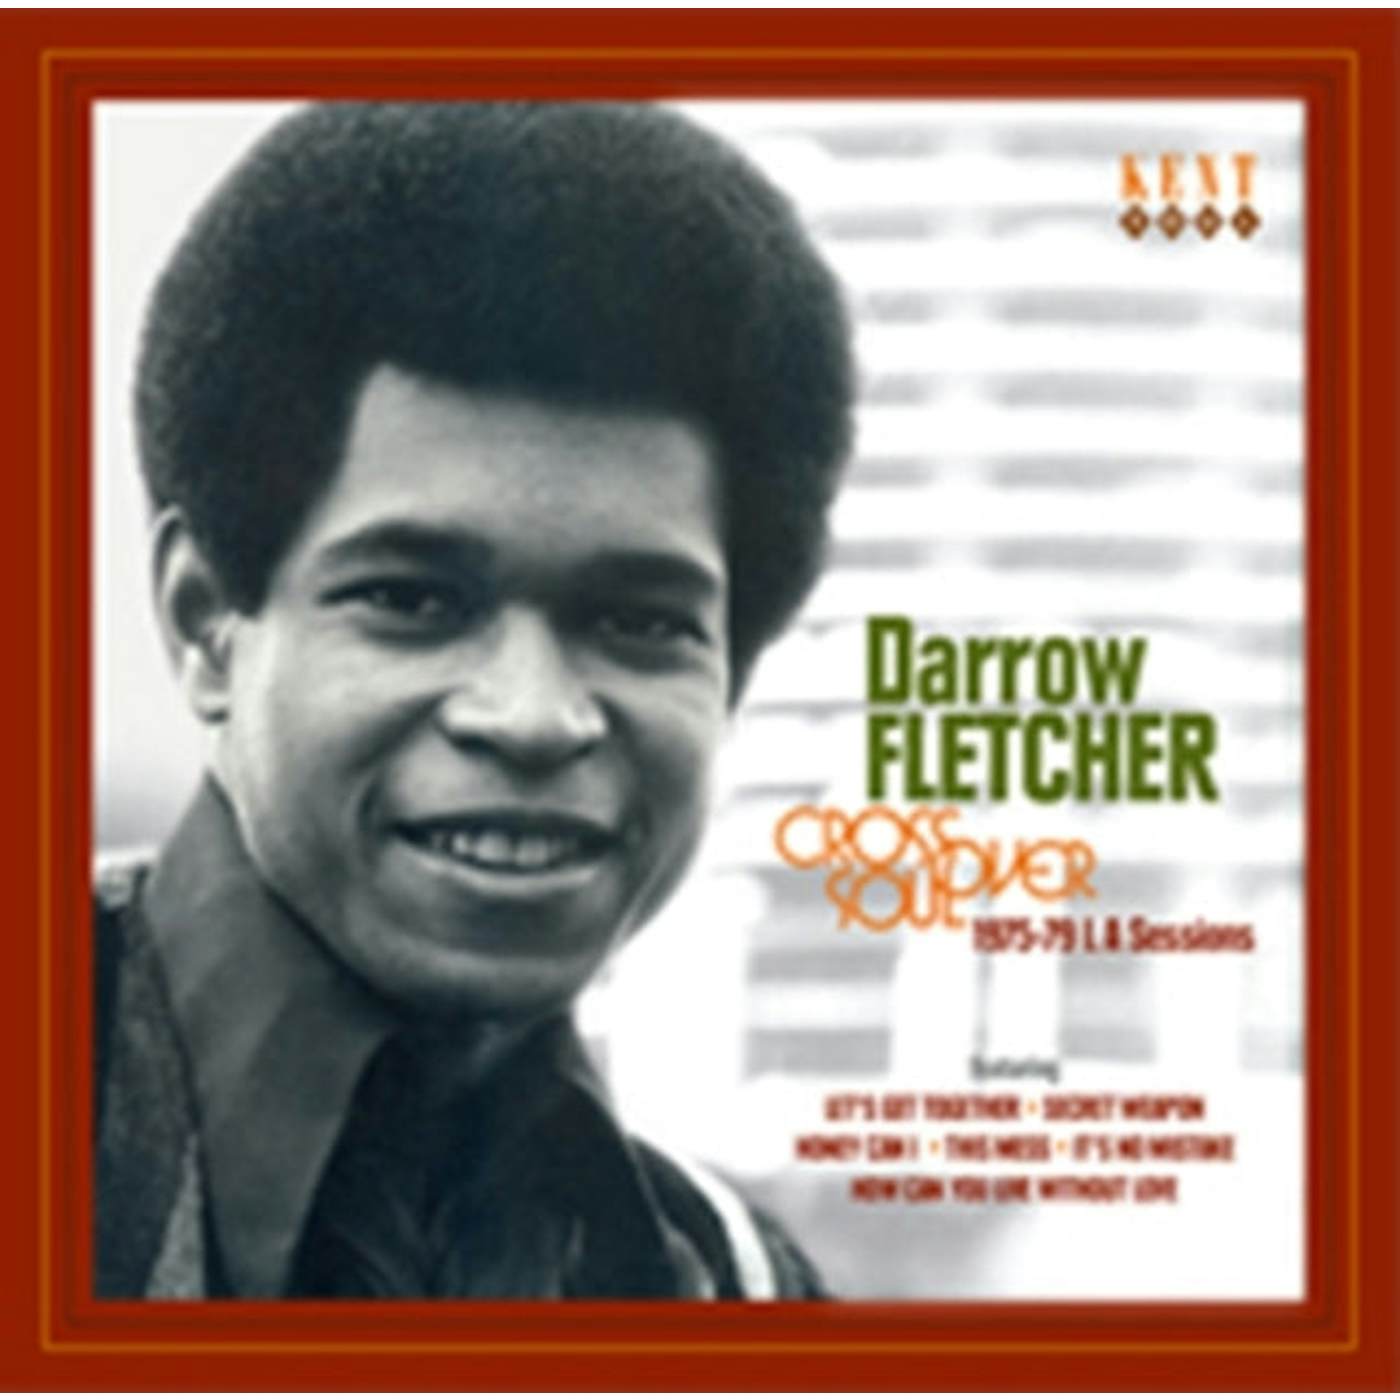 Darrow Fletcher CD - Crossover Soul - 19 75-79 La Sessions